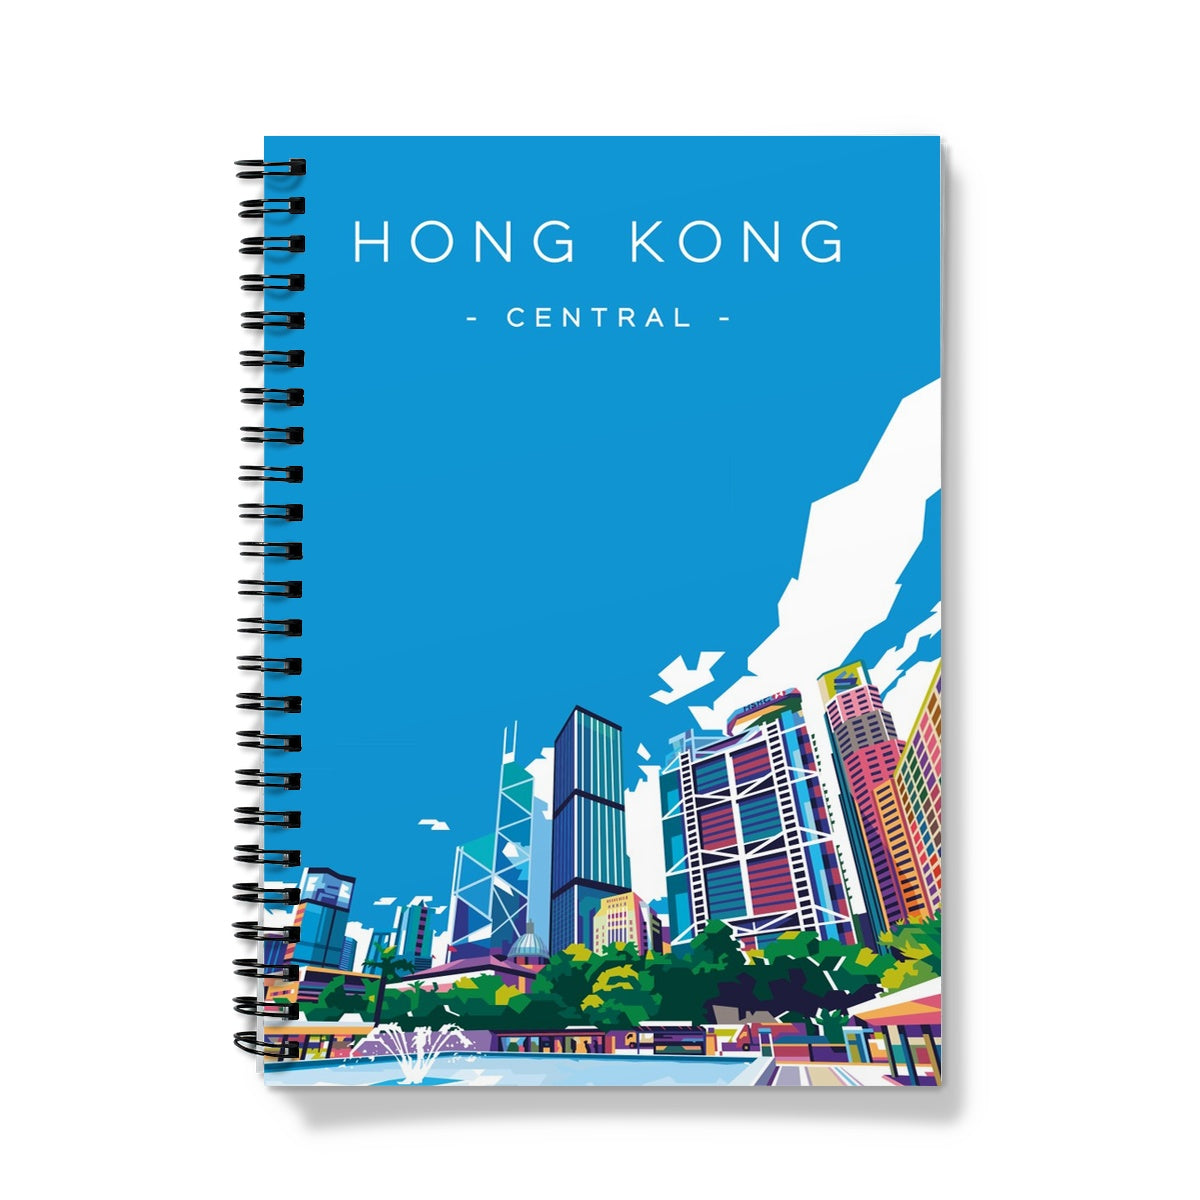 Hong Kong Travel - Central Notebook